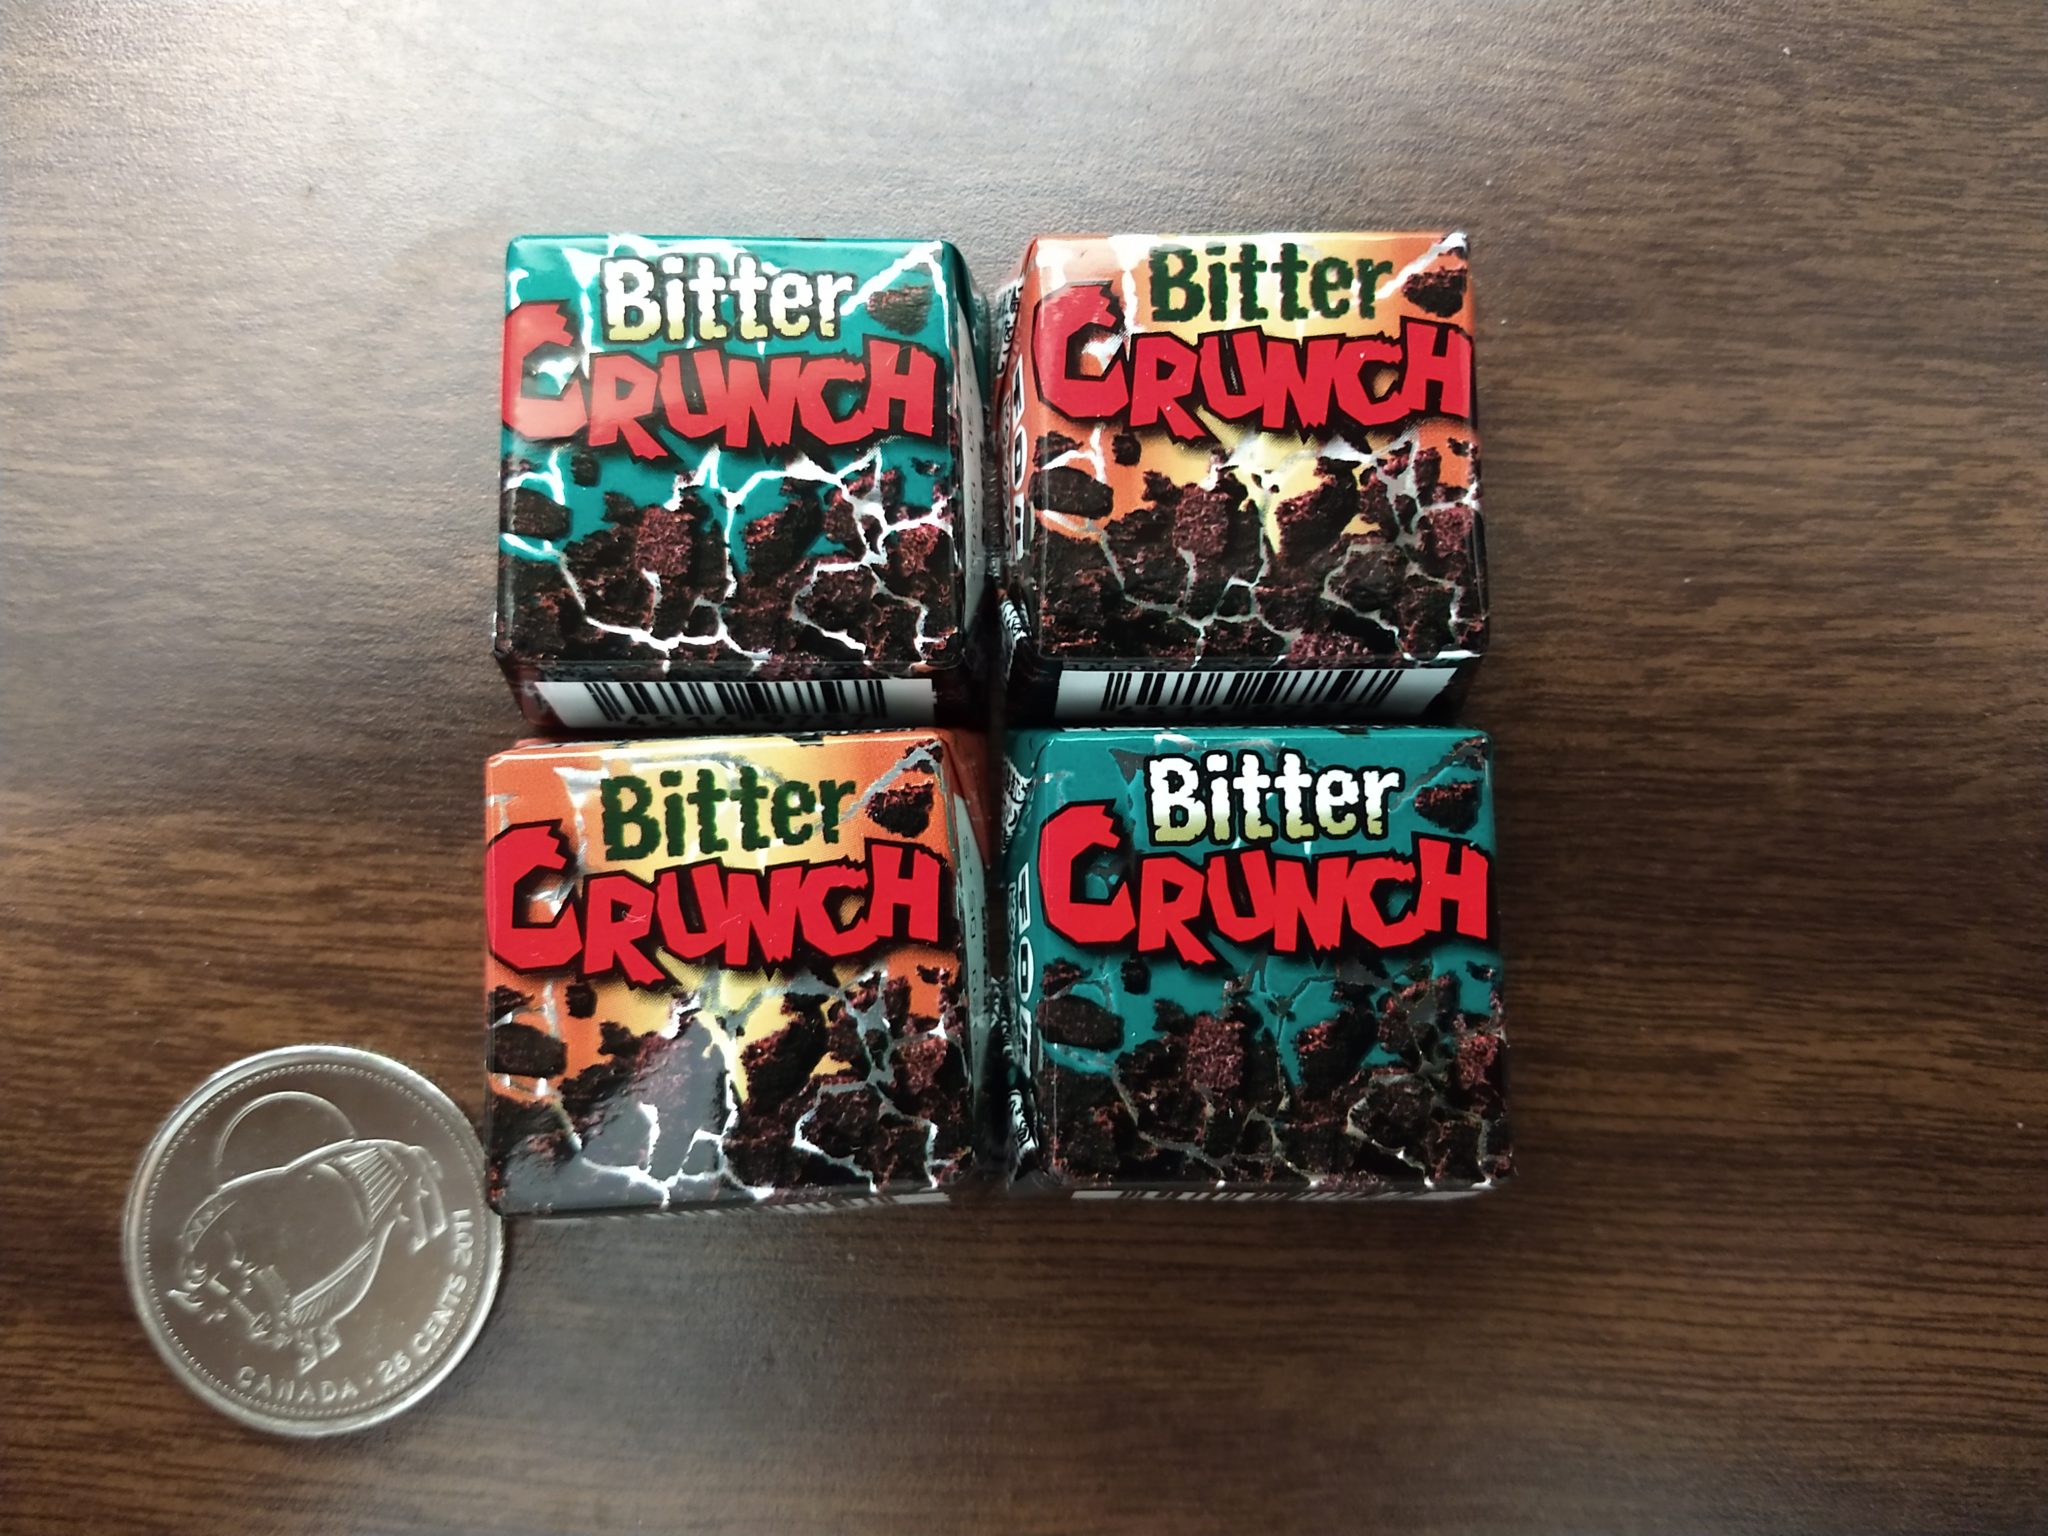 Tirol Chocolate – Bitter Crunch